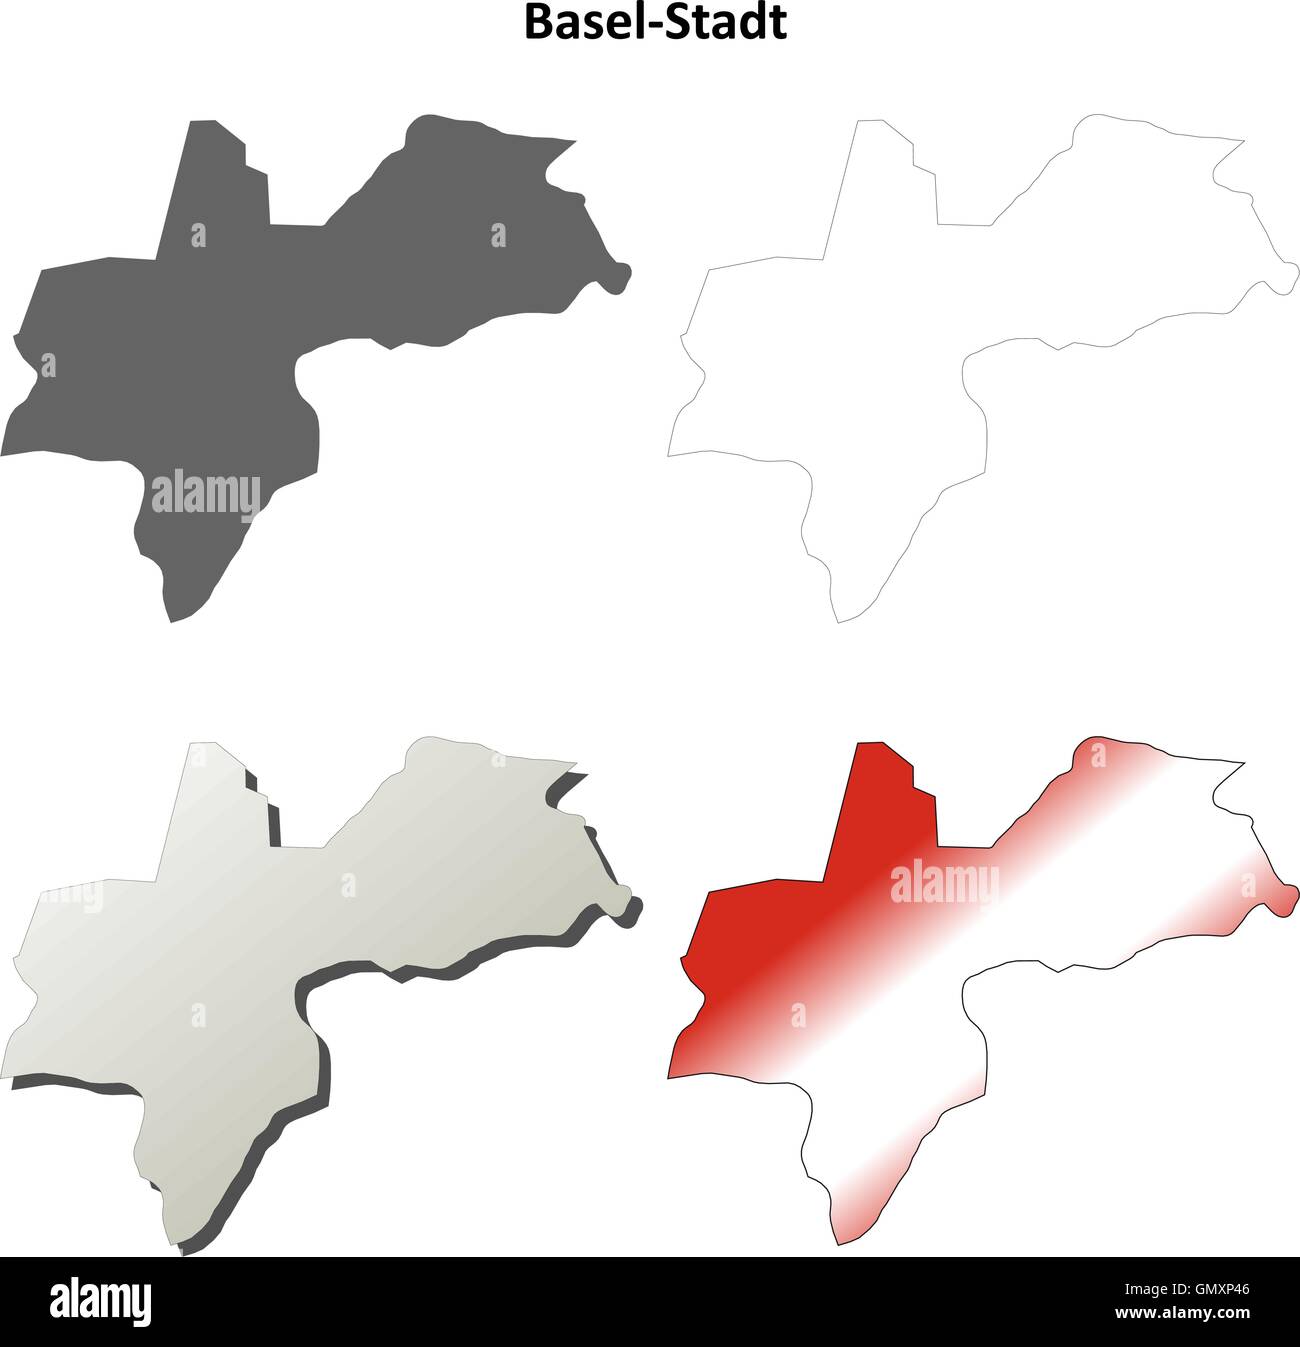 Basel-Stadt blank detailed outline map set Stock Vector